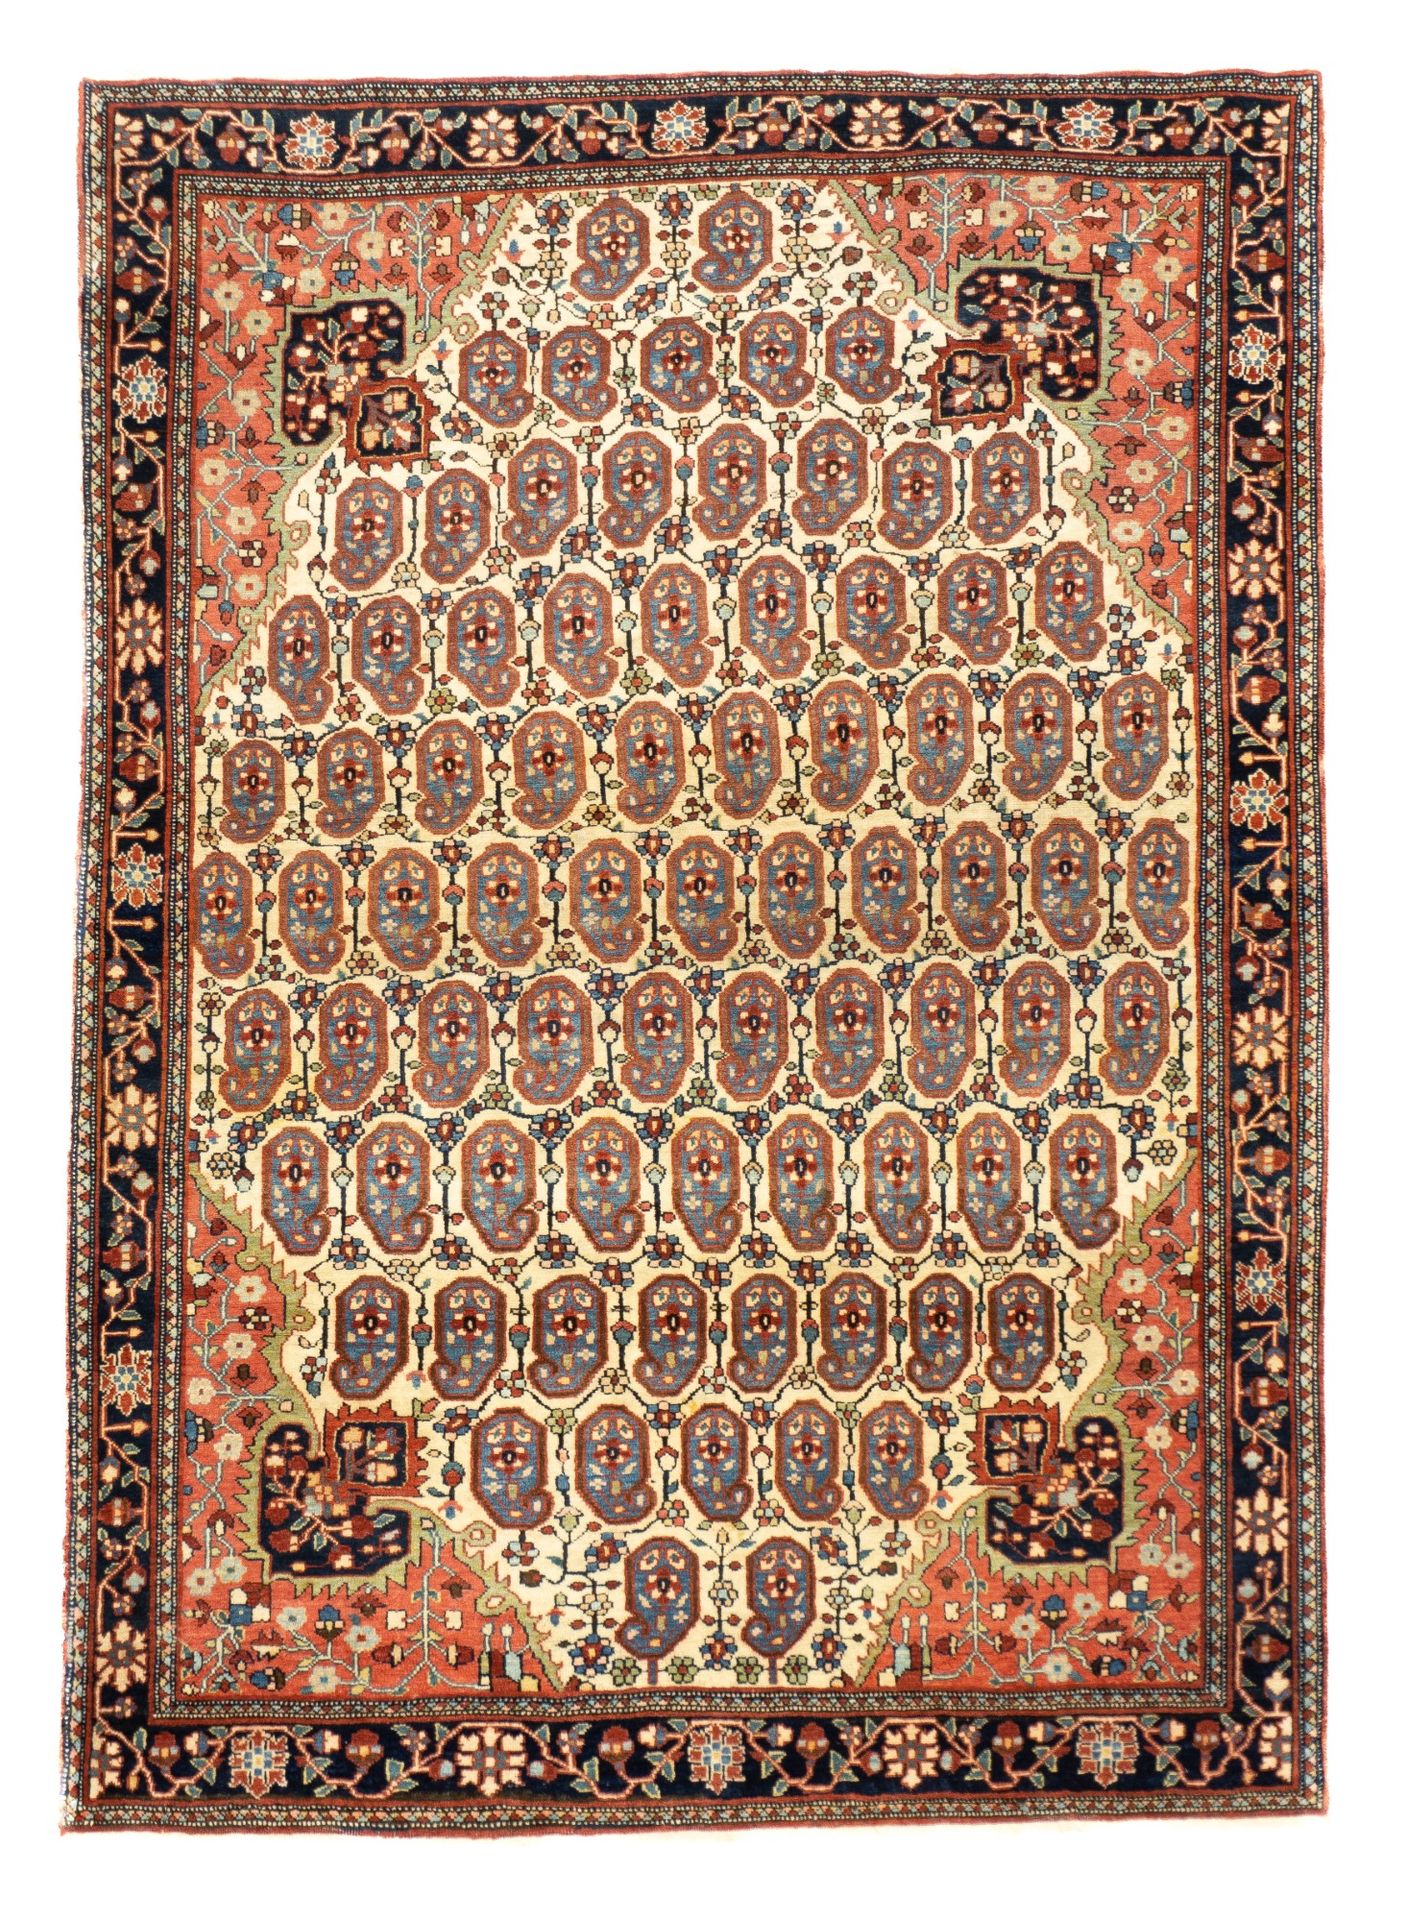 Null Antiker Farahan Sarouk Teppich, 3'8" x 5' ( 1.12 x 1.52 M )